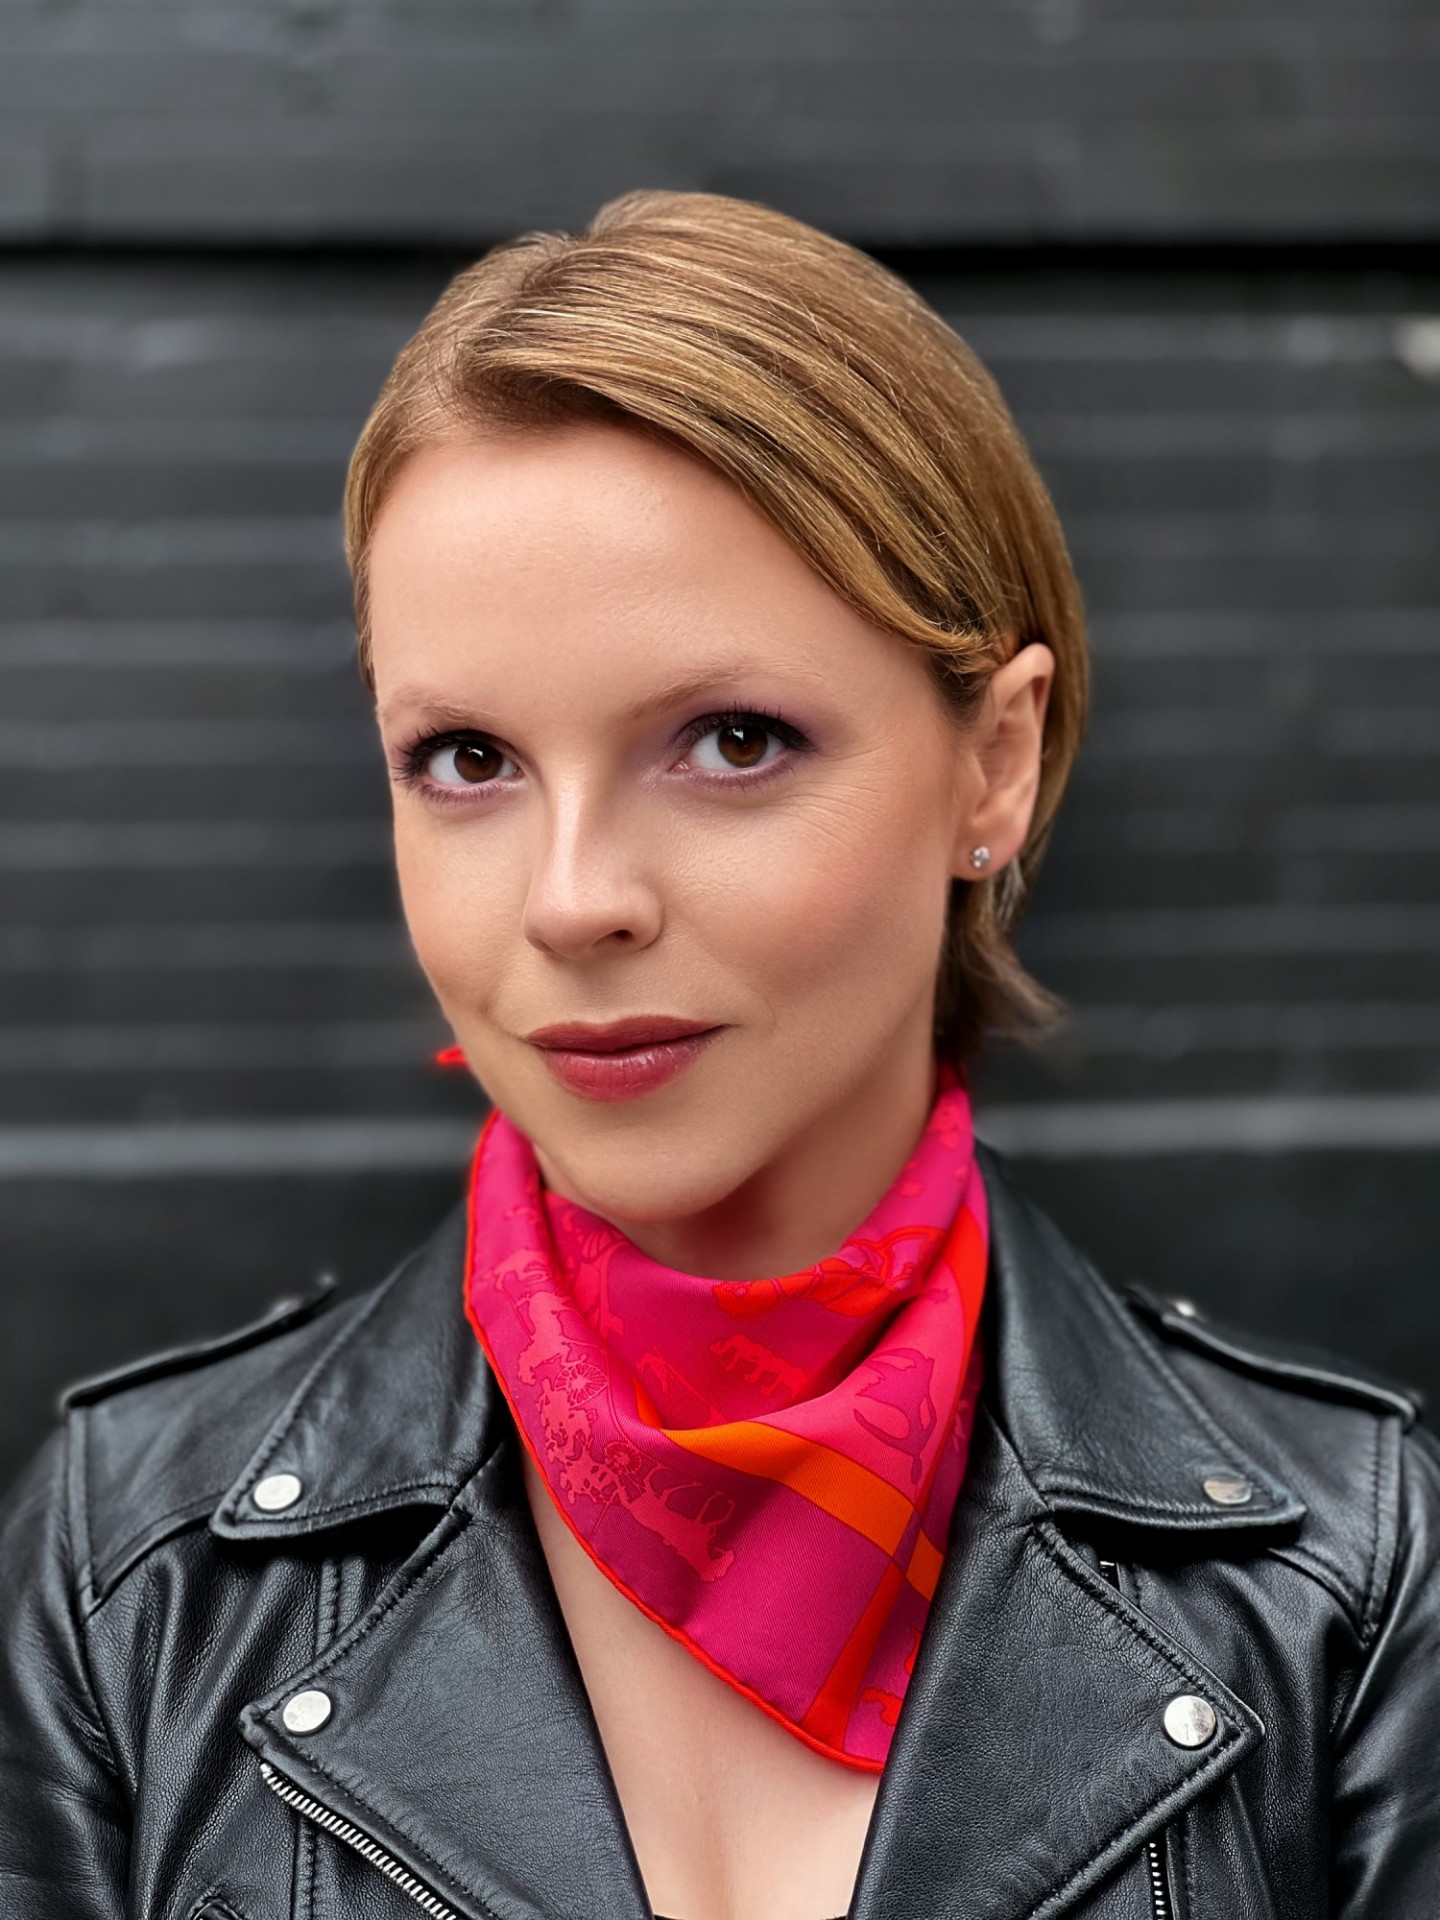 Professor Stern-Baczewska in a black jacket and a pink and orange neckerchief.